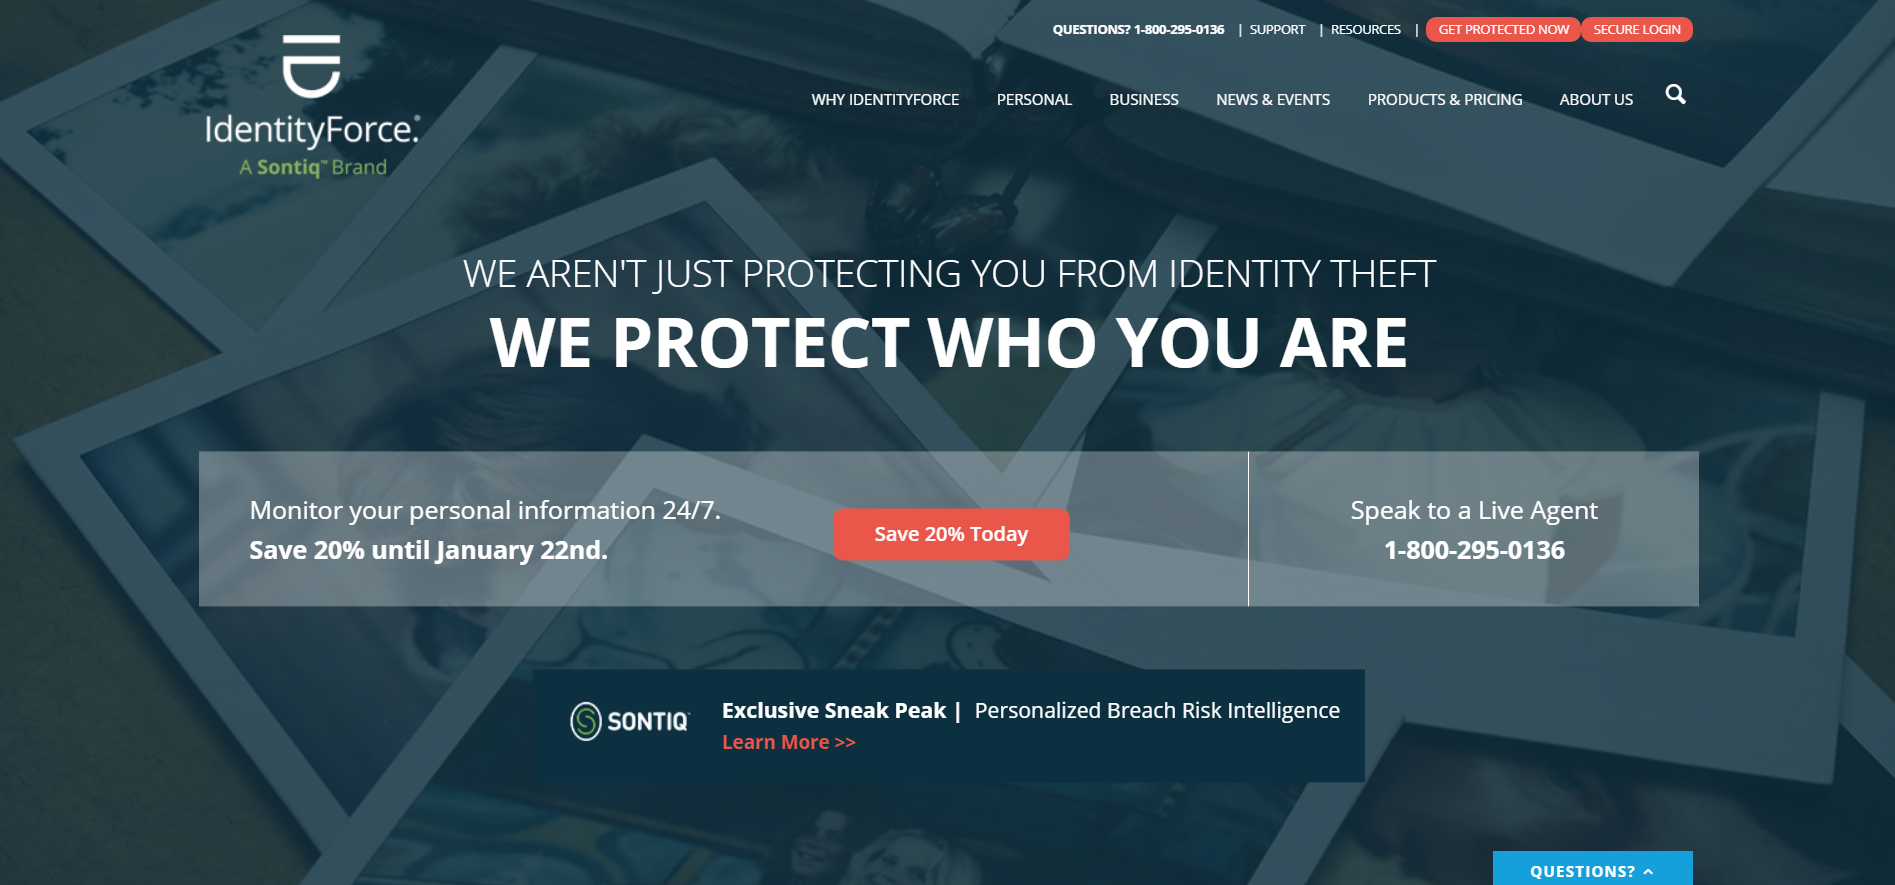 A screenshot of the IdentityForce website homepage.